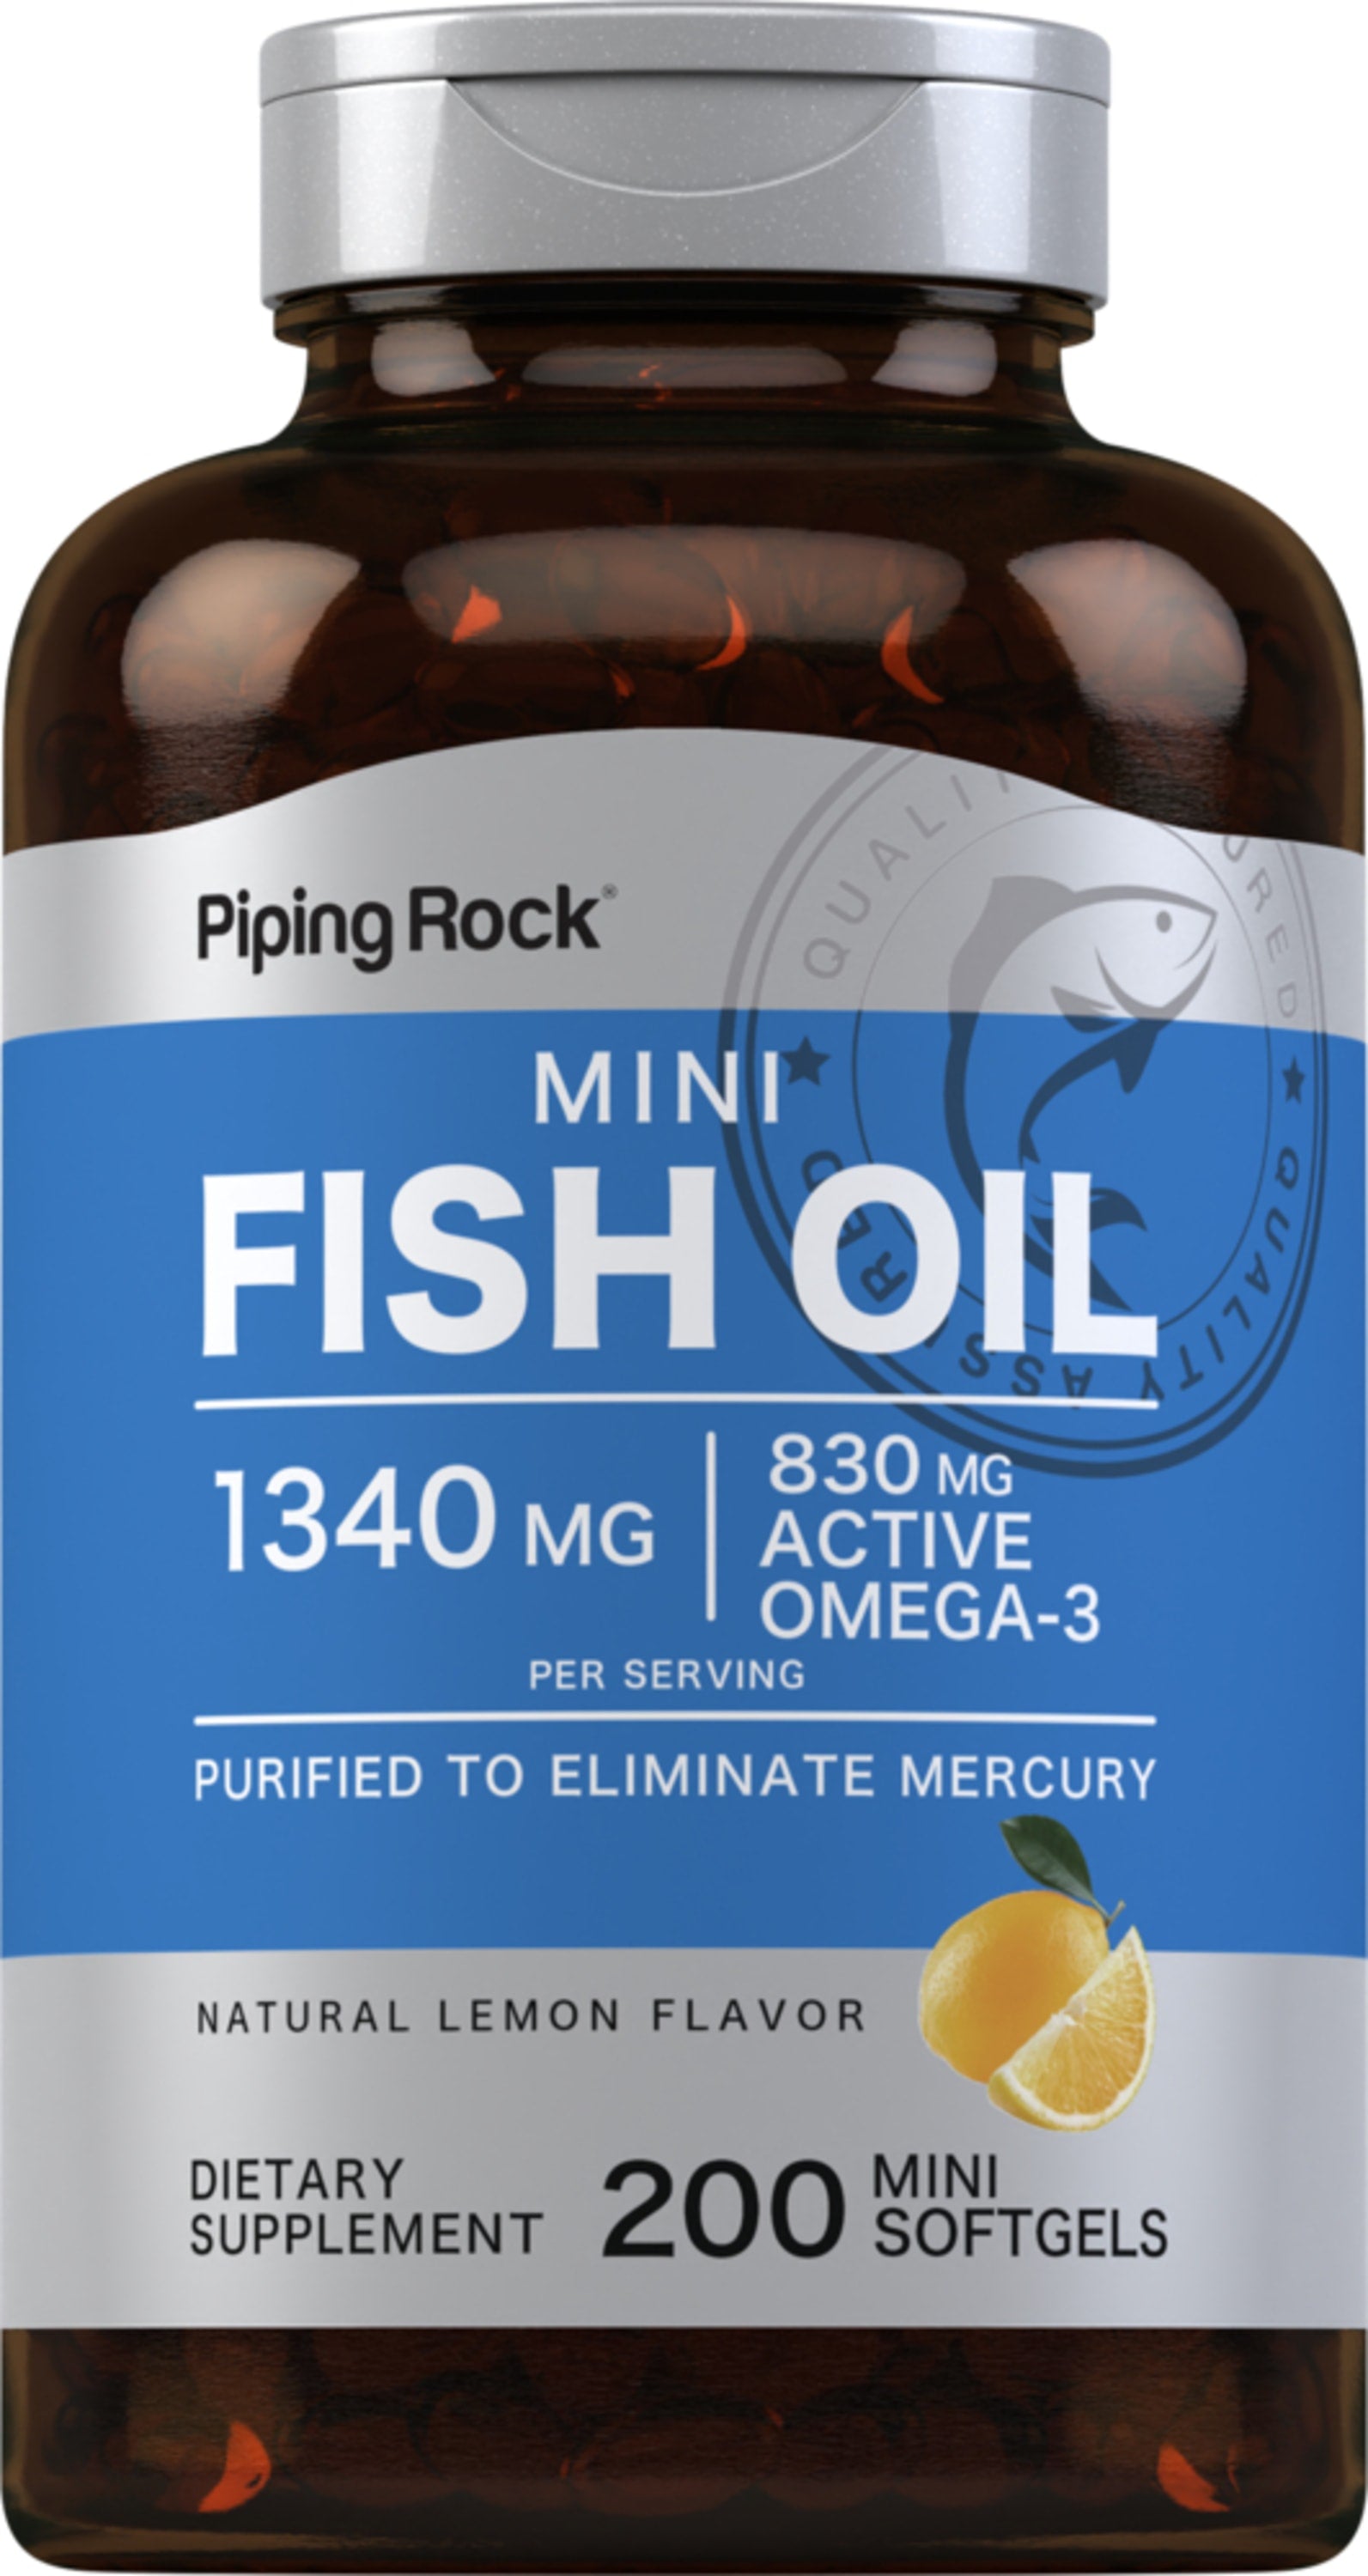 Mini Omega-3 Fish Oil Lemon Flavor, 1300 mg (per serving), 200 Mini Softgels